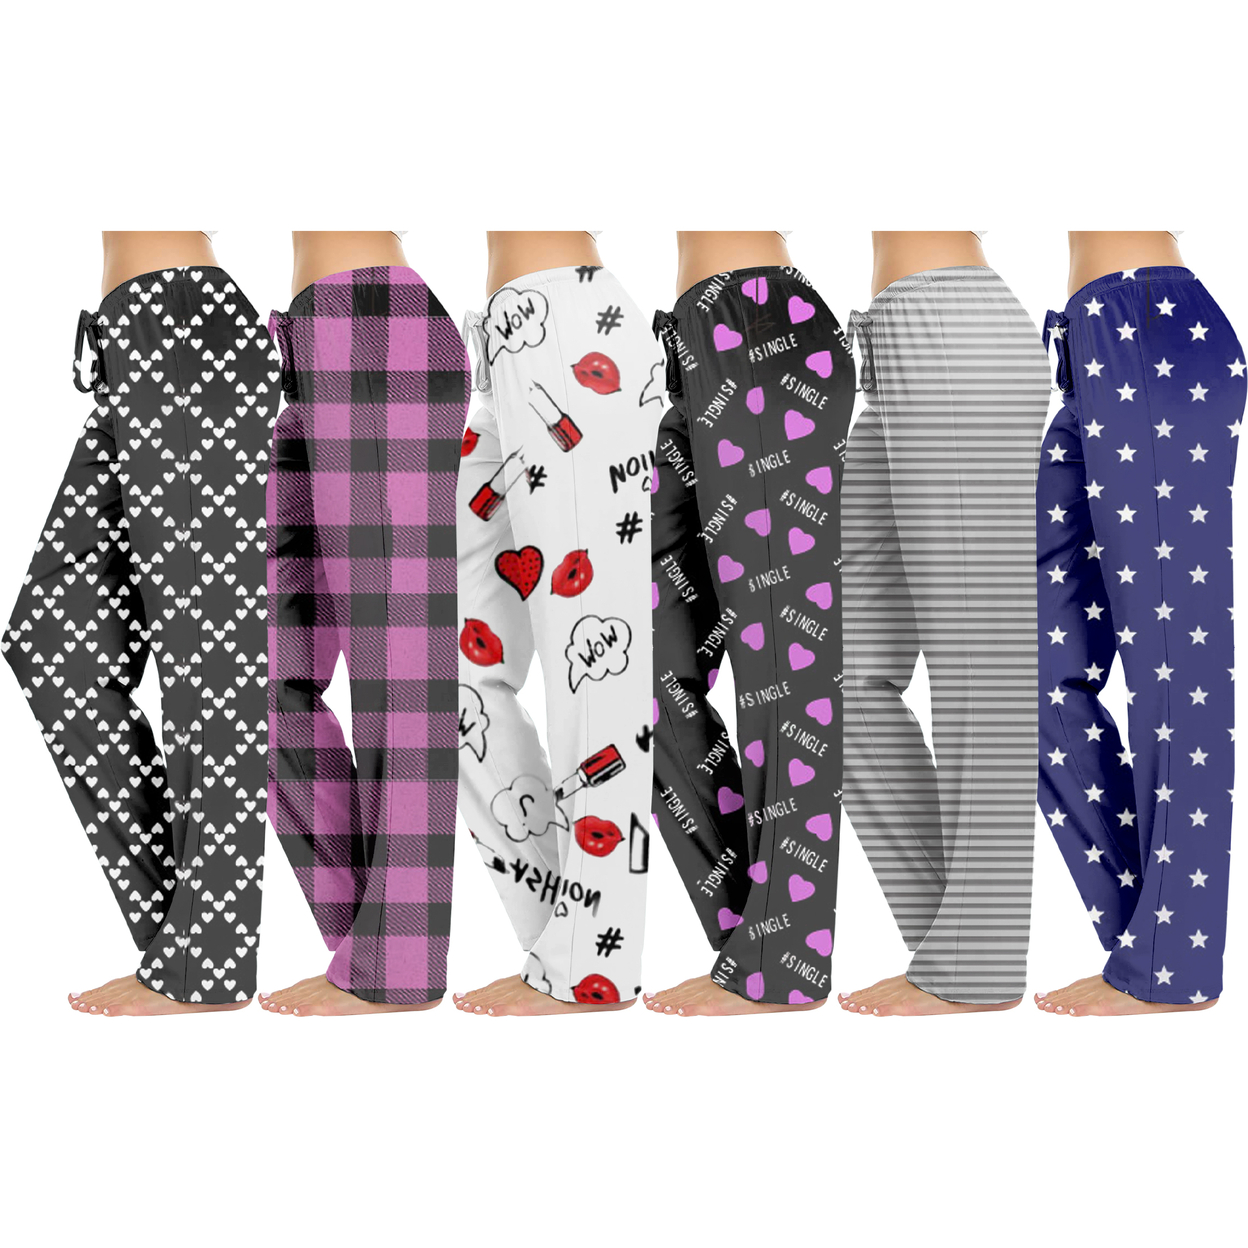 5-Pack: Women's Casual Fun Printed Lightweight Lounge Terry Knit Pajama Bottom Pants - Small, Animal